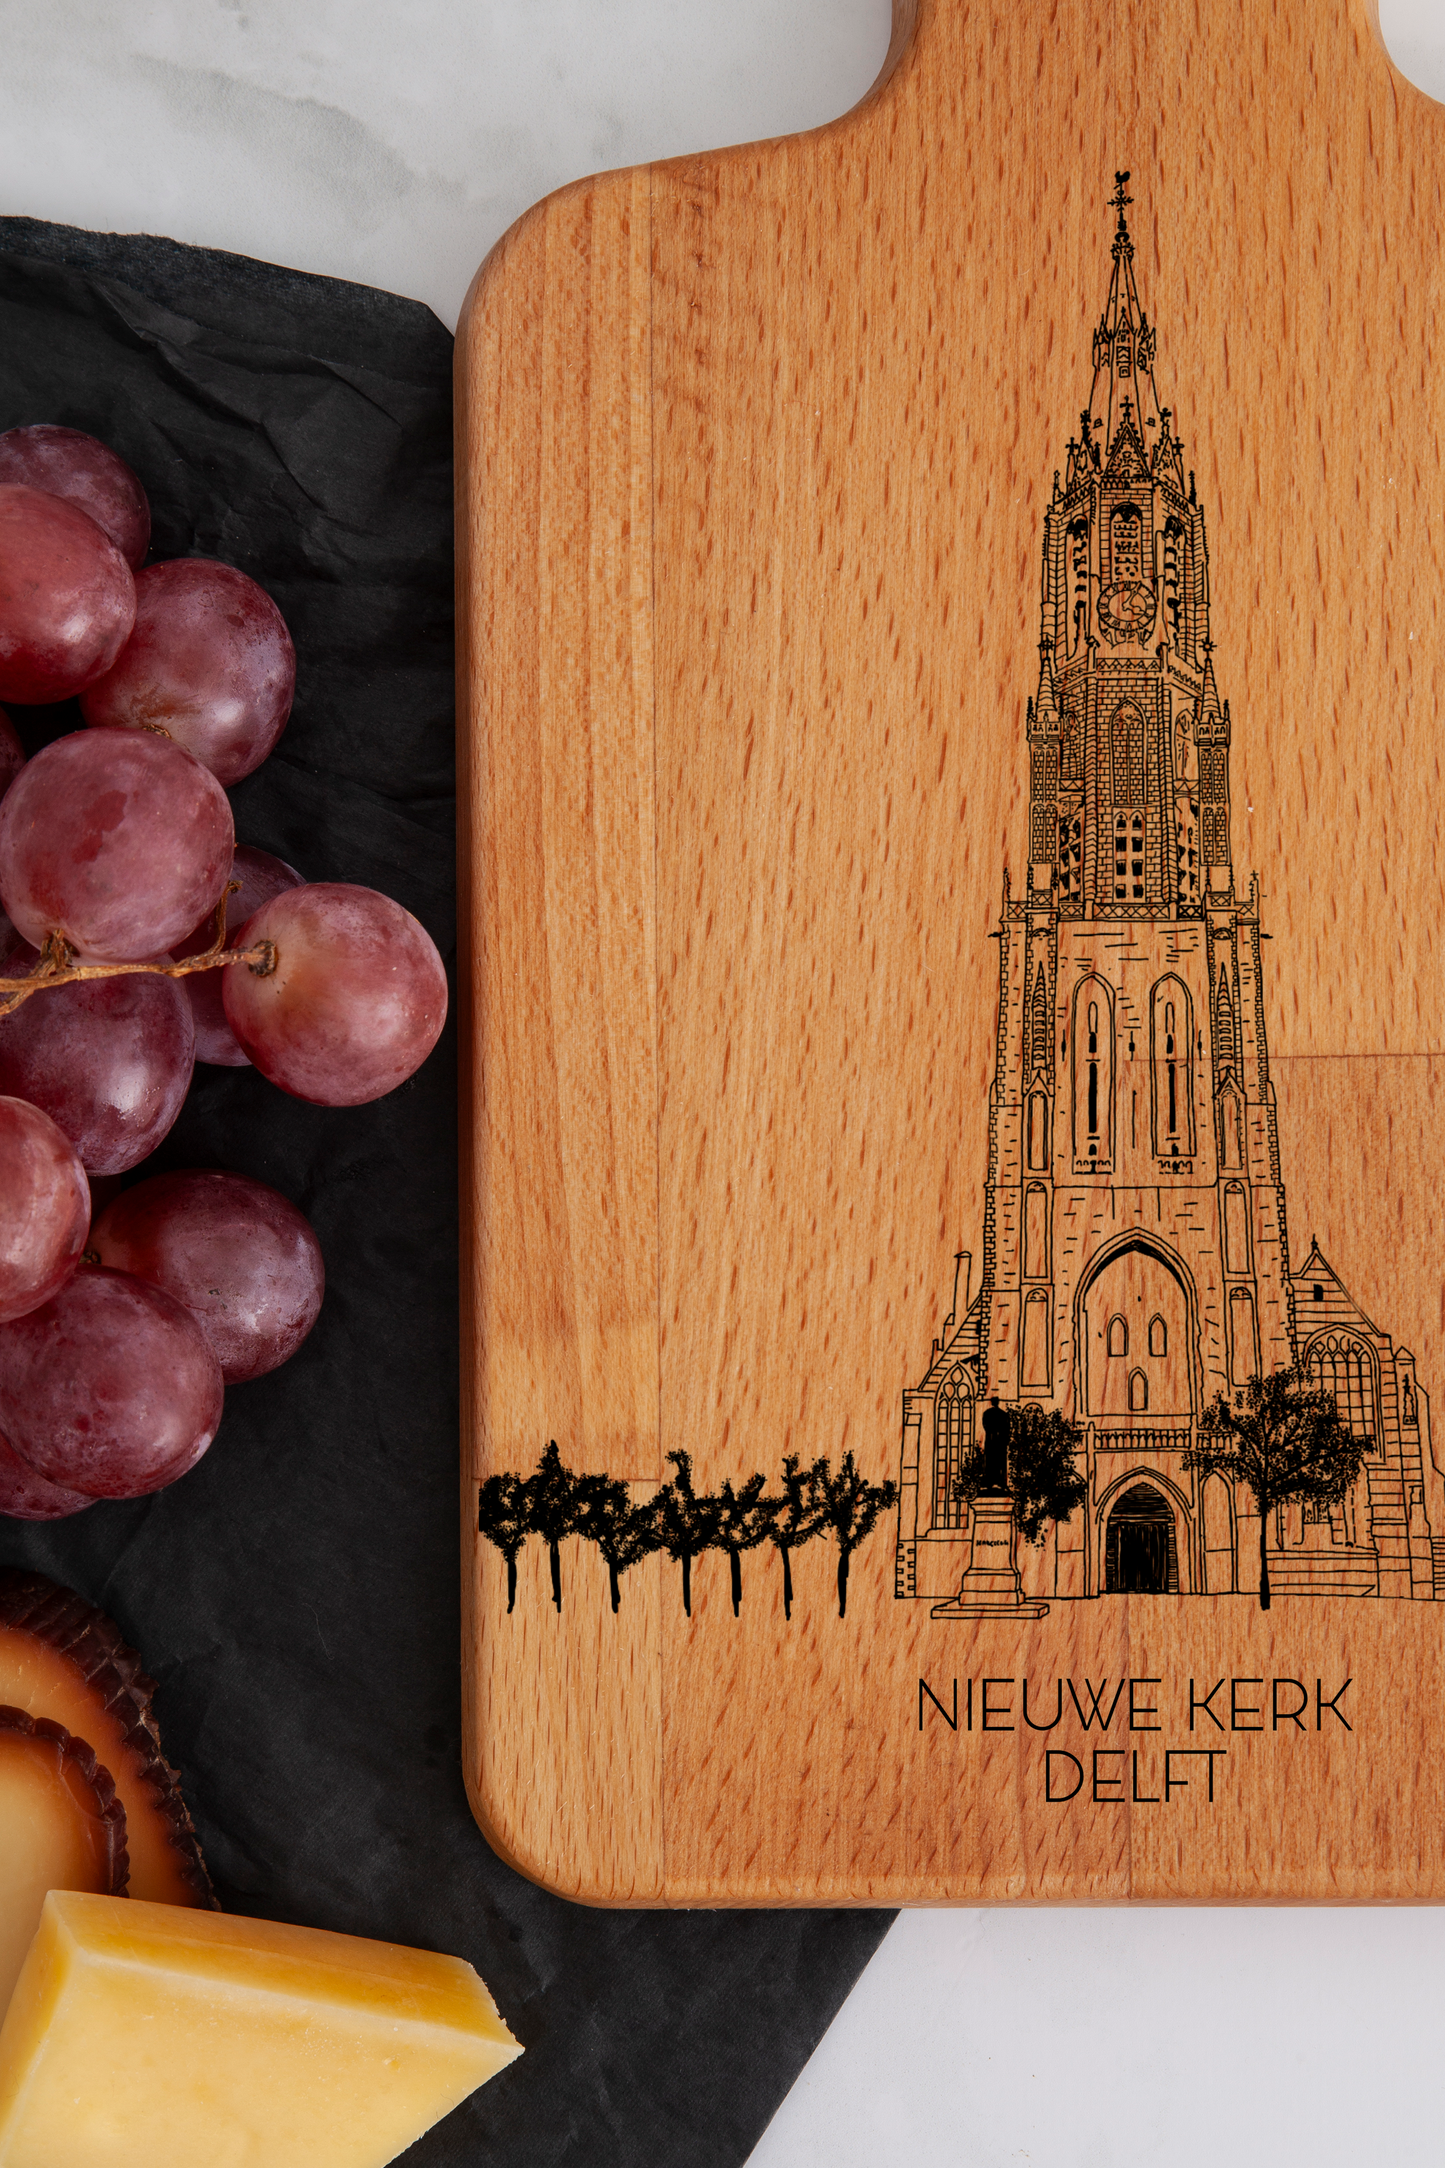 Delft, Nieuwe Kerk, cheese board, close-up